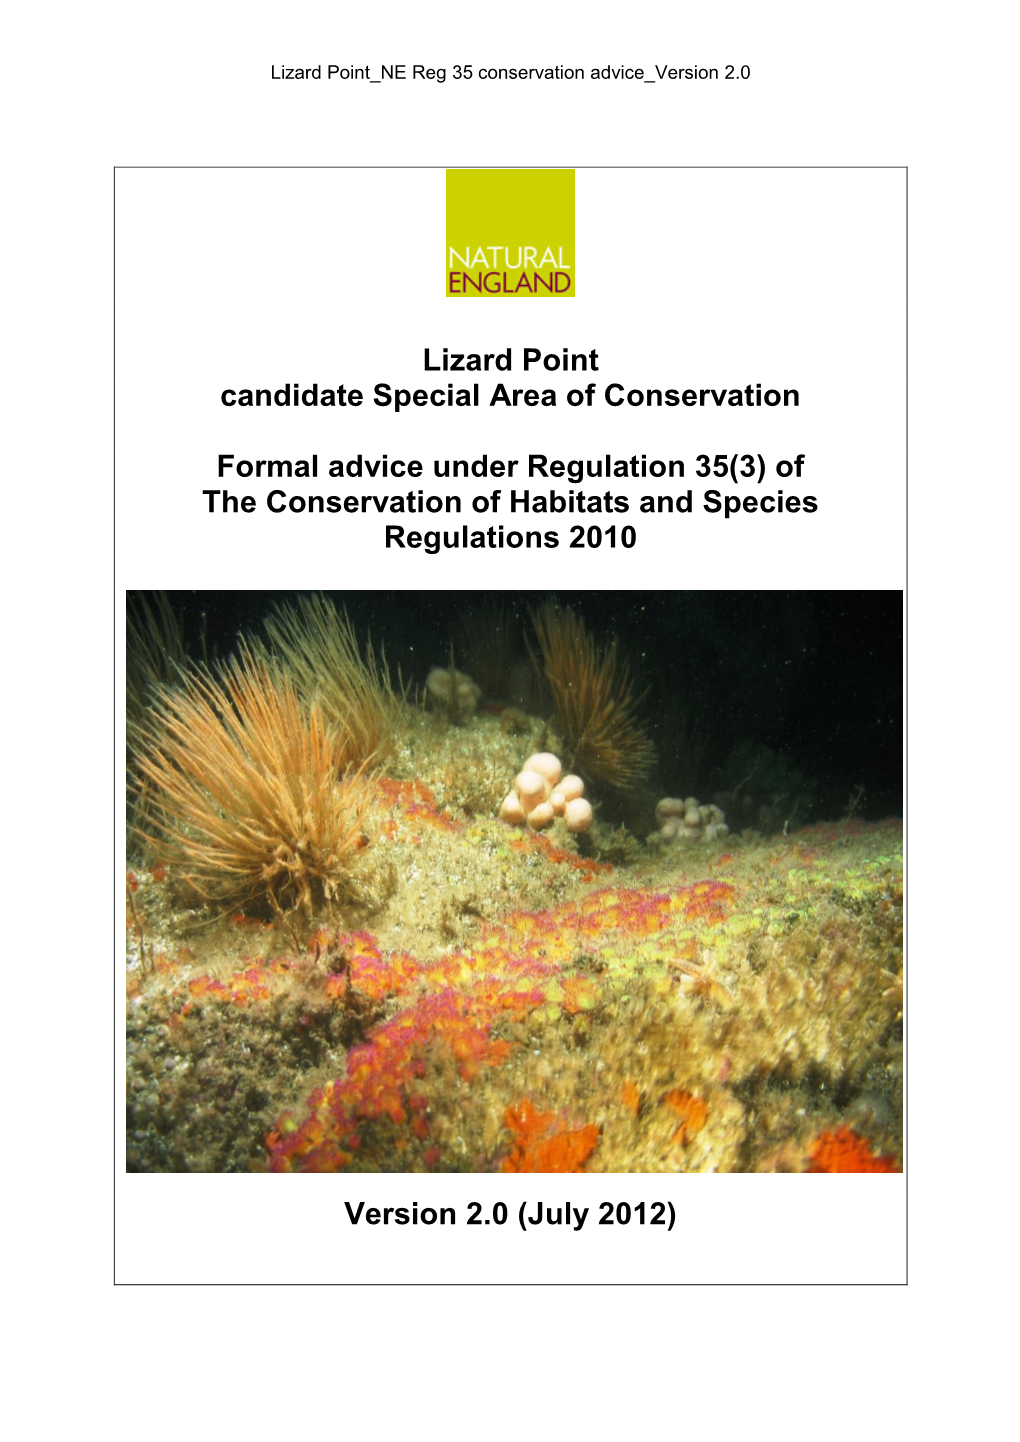 Lizard Point Csac Regulation 35 Conservation Advice Package